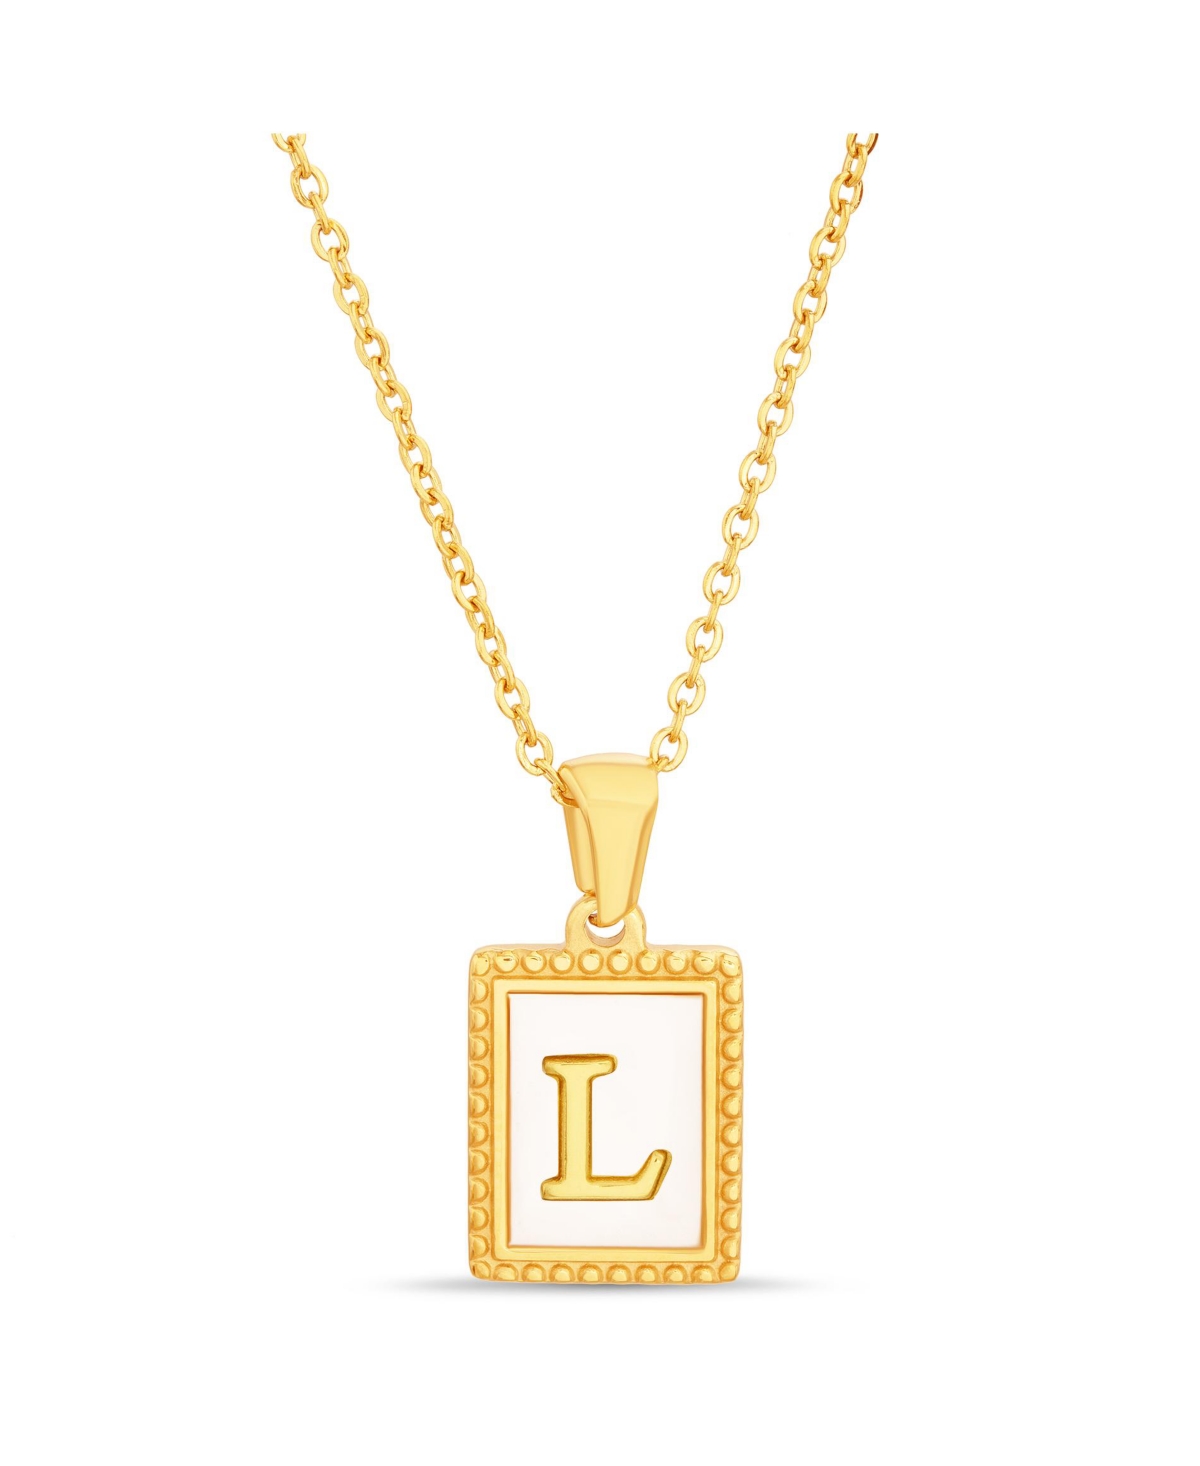 Gold-Tone Letter Initial Pendant Necklace - S